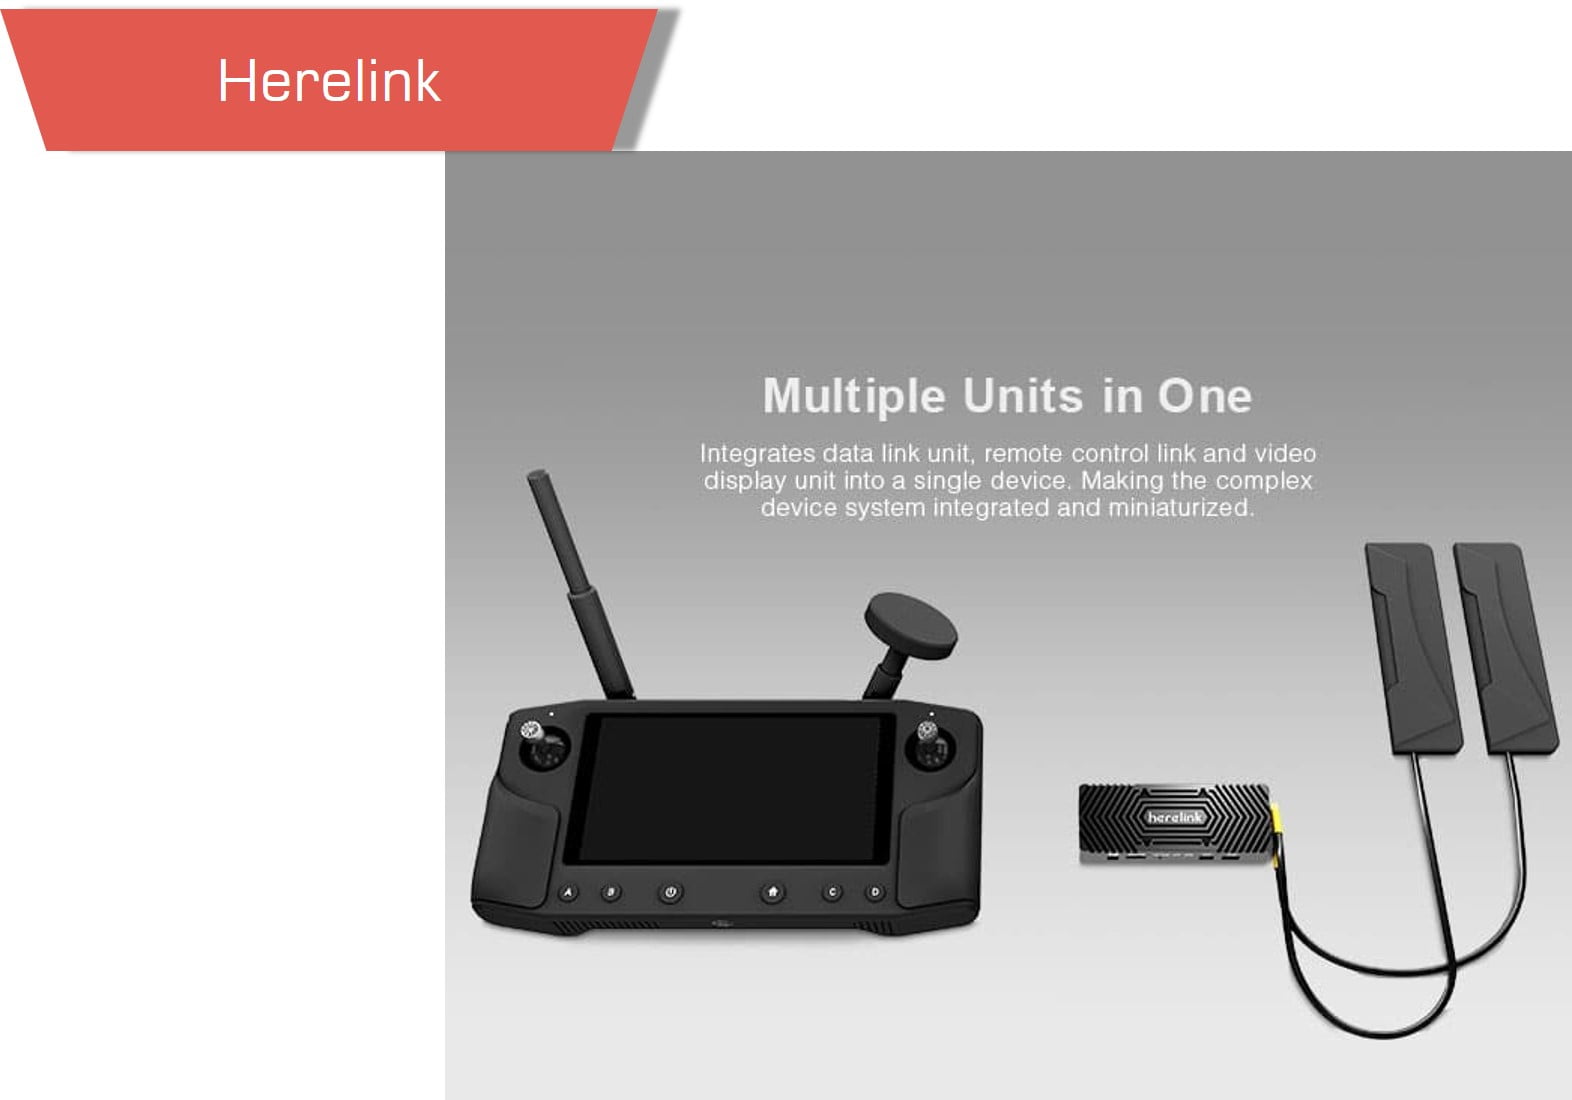 Dfbf - handheld herelink hd,herelink hd video,video transmission,control system - motionew - 8